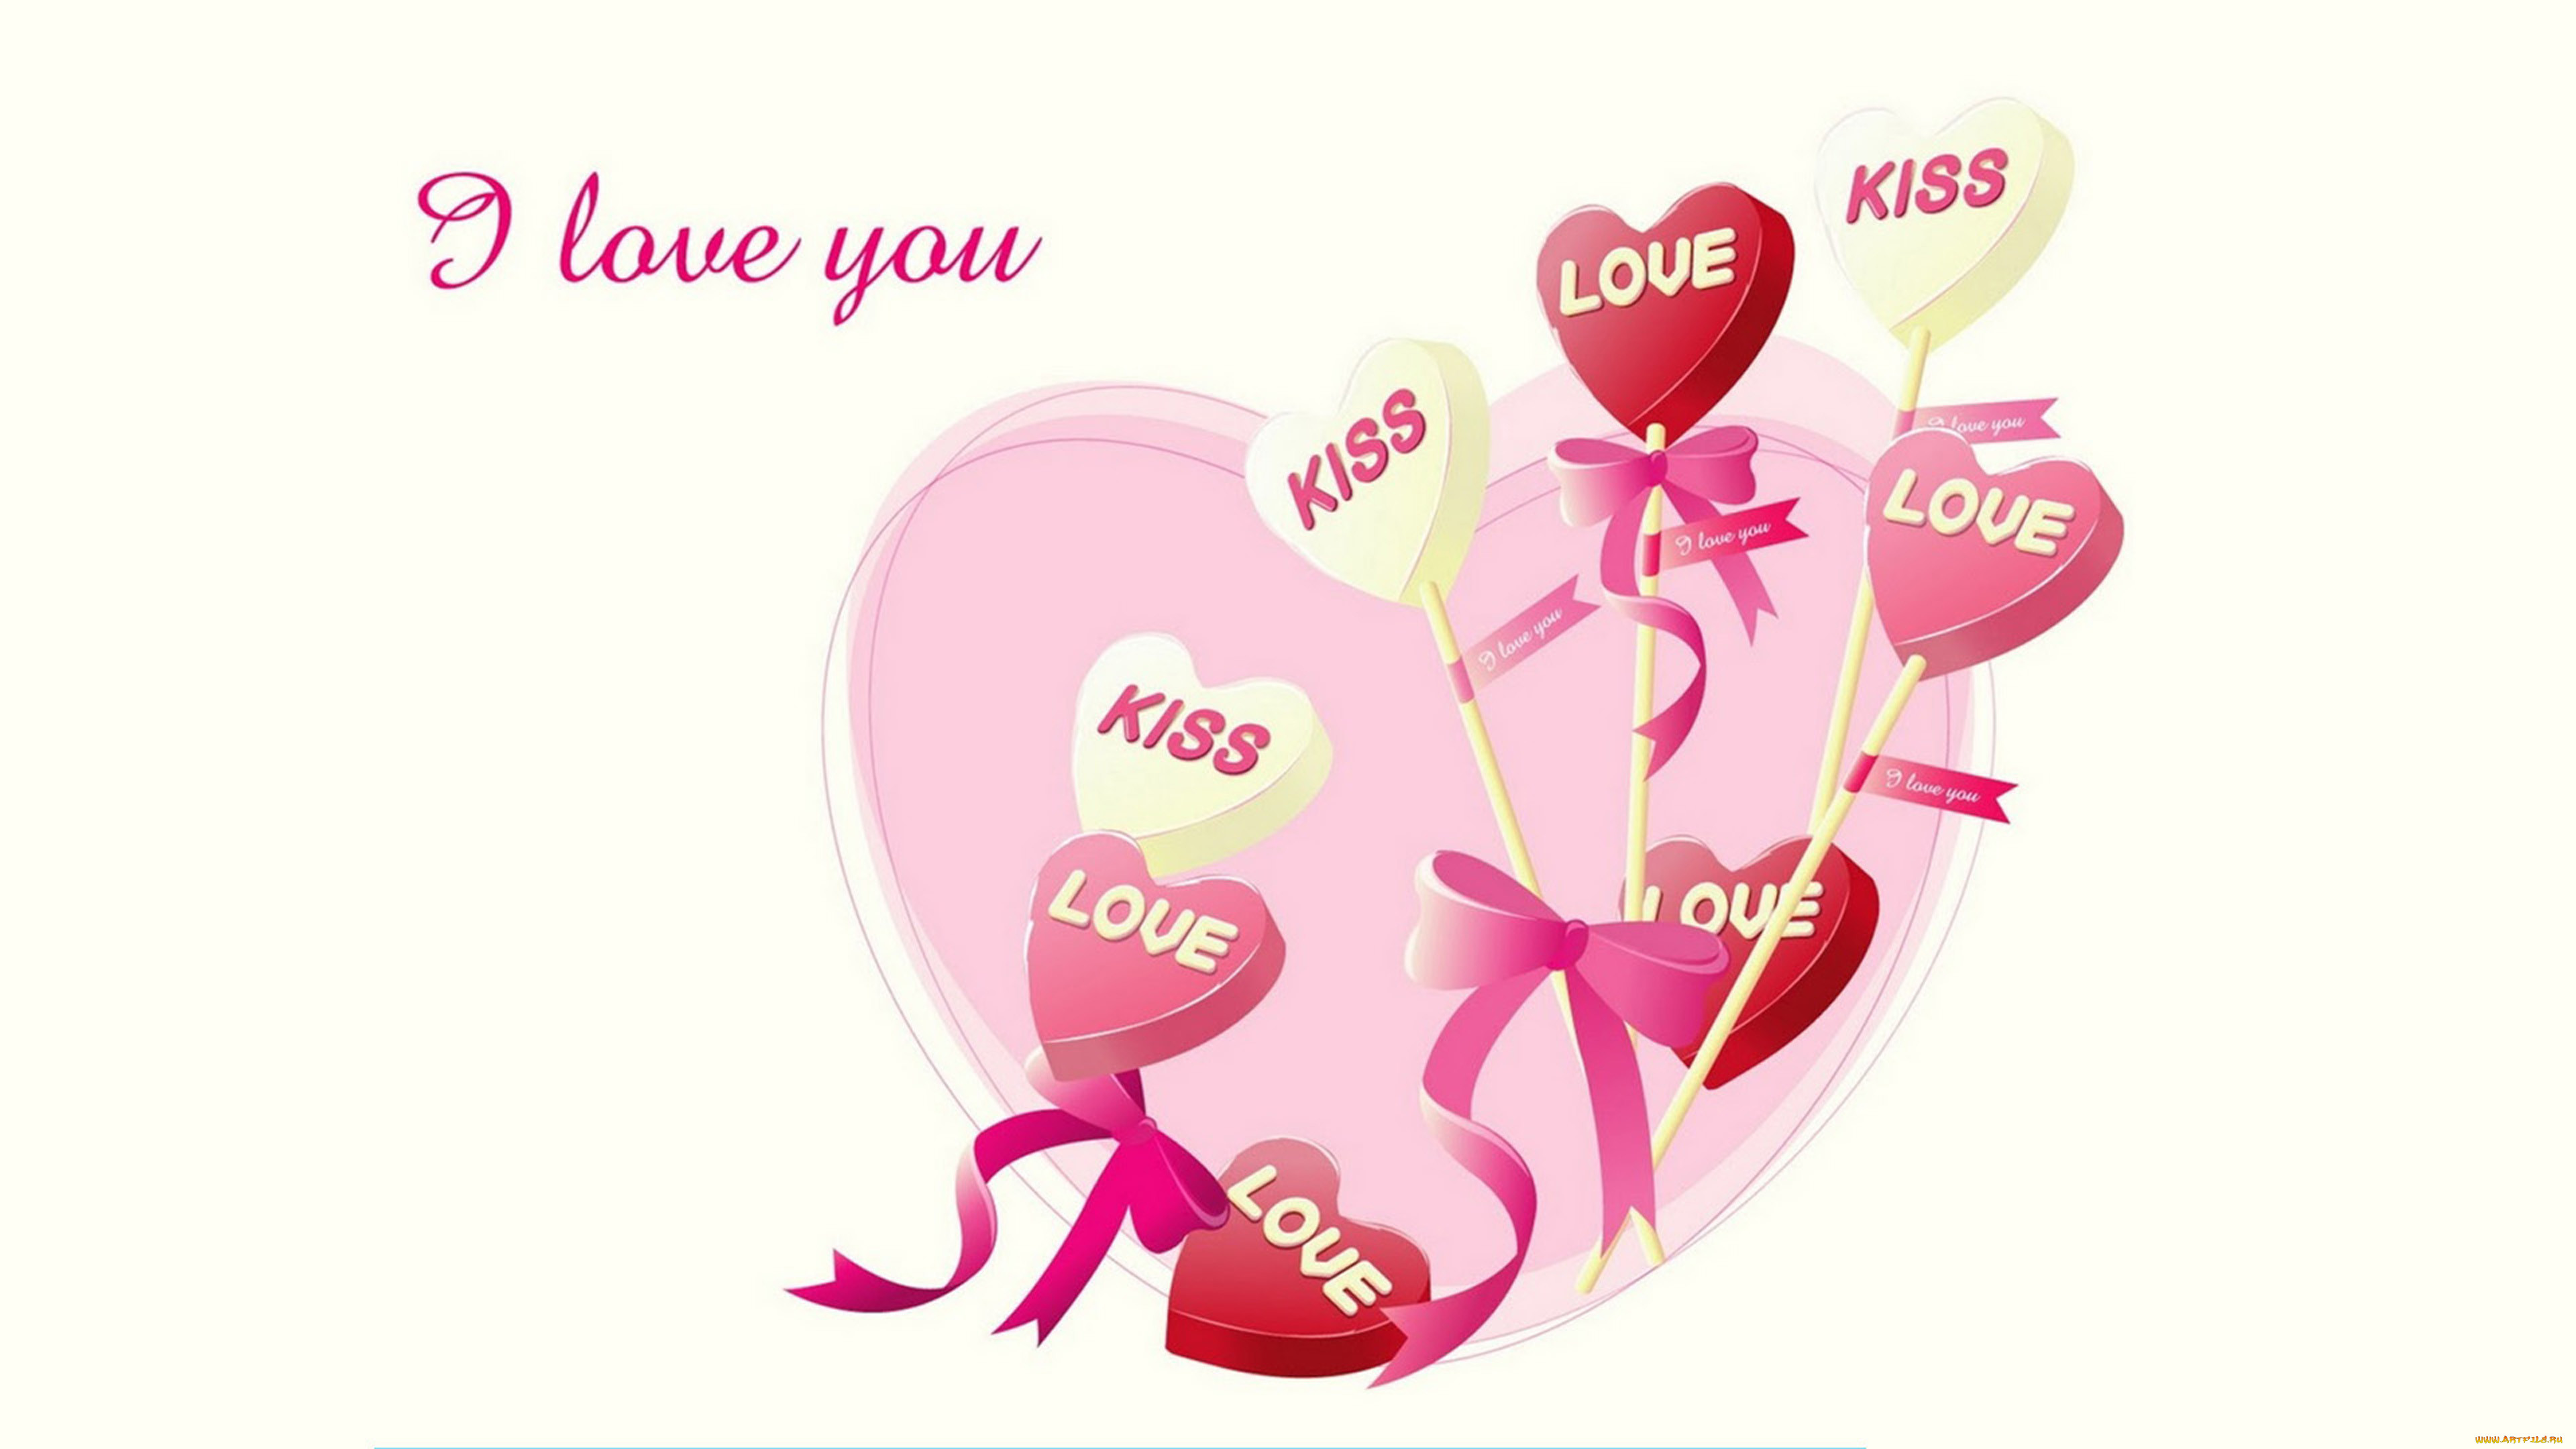 Love s kisses